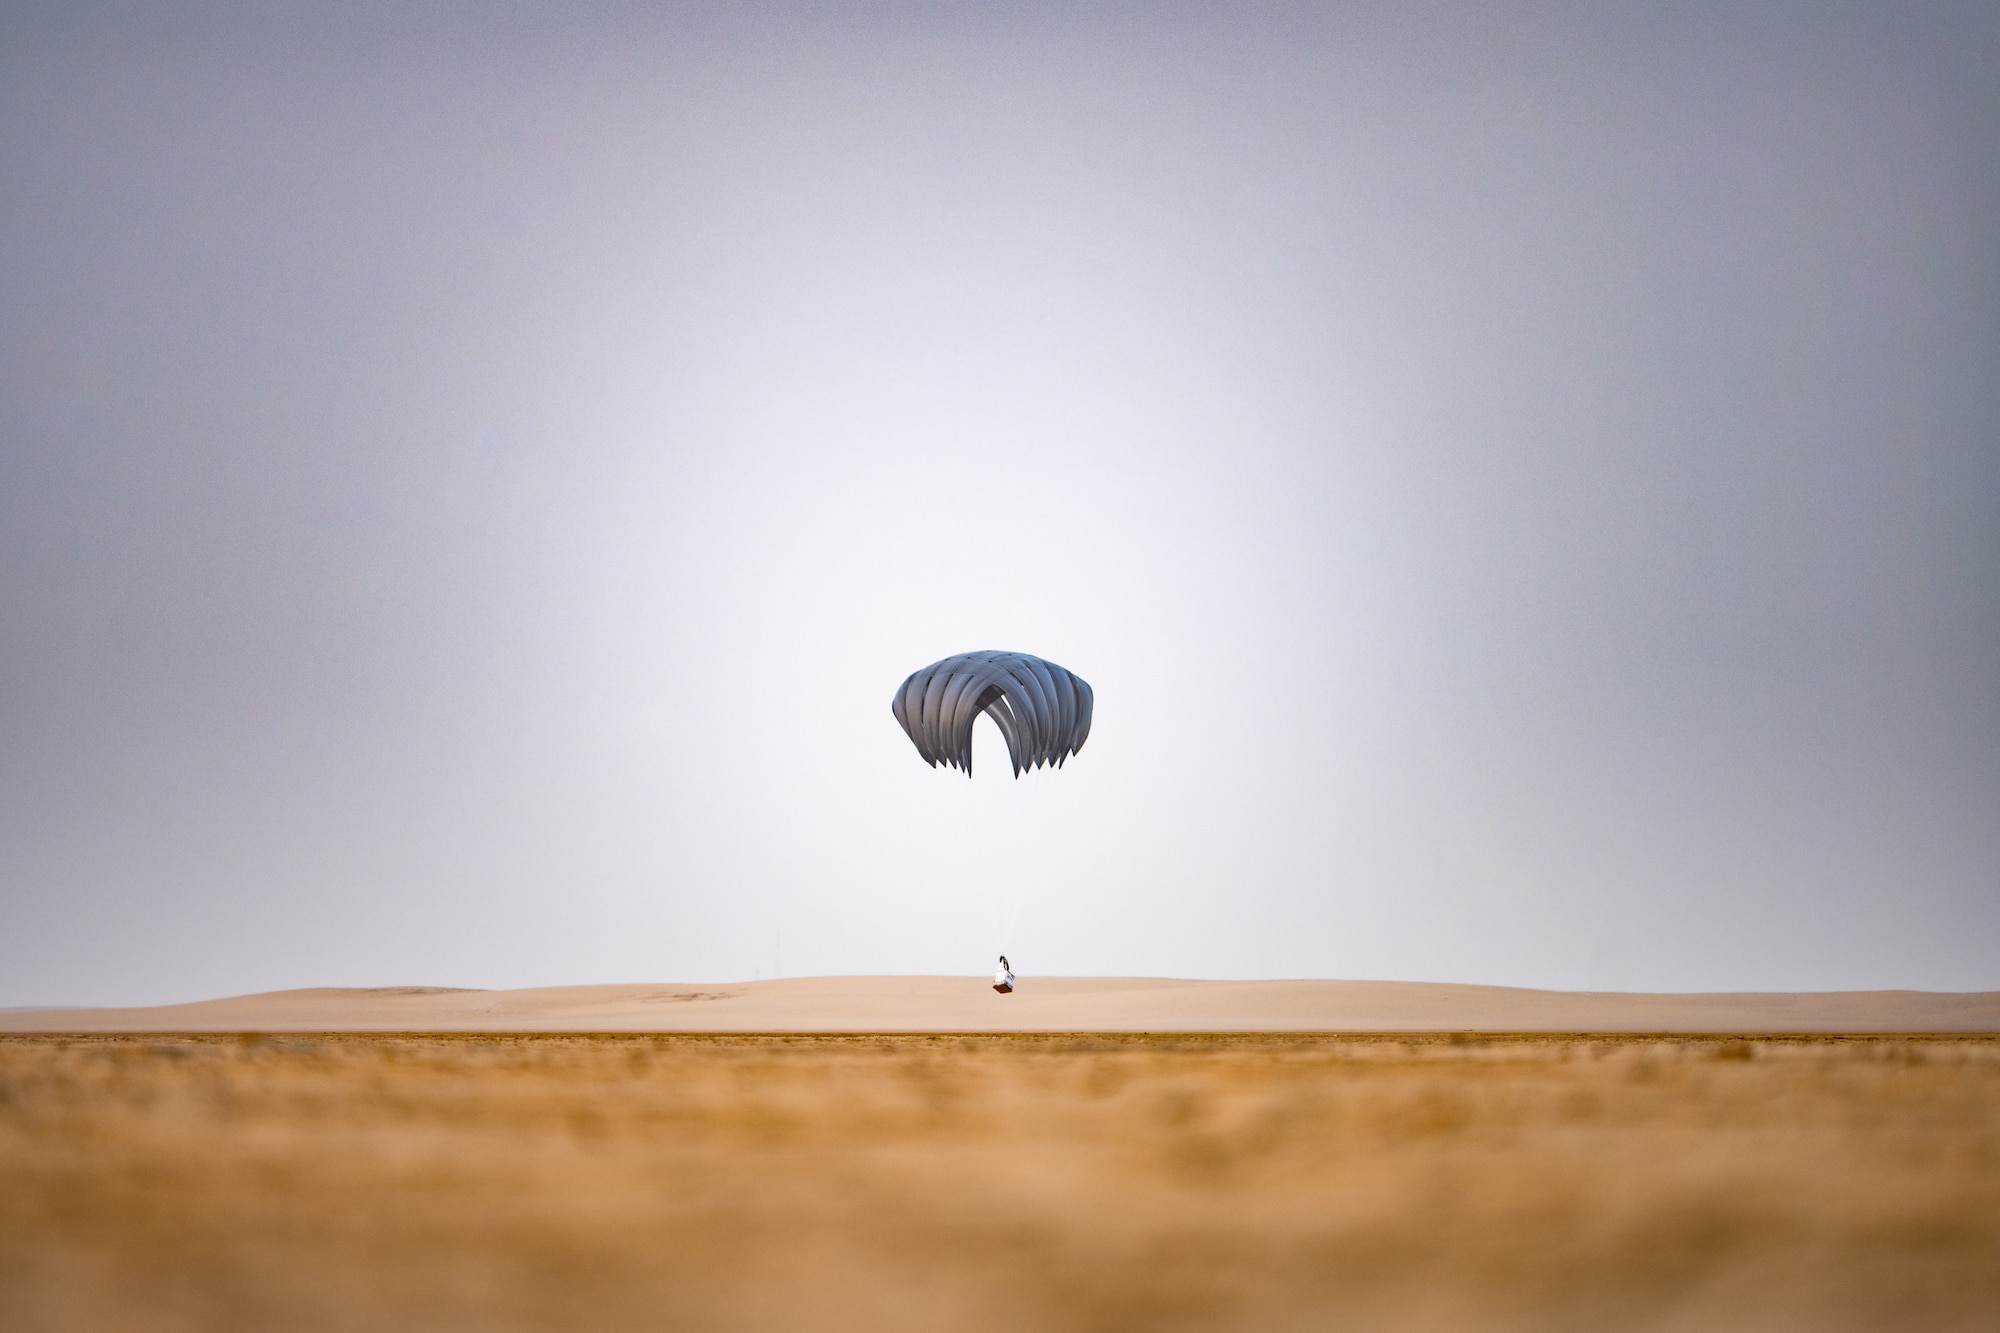 Cargo descending to the desert with a parachute